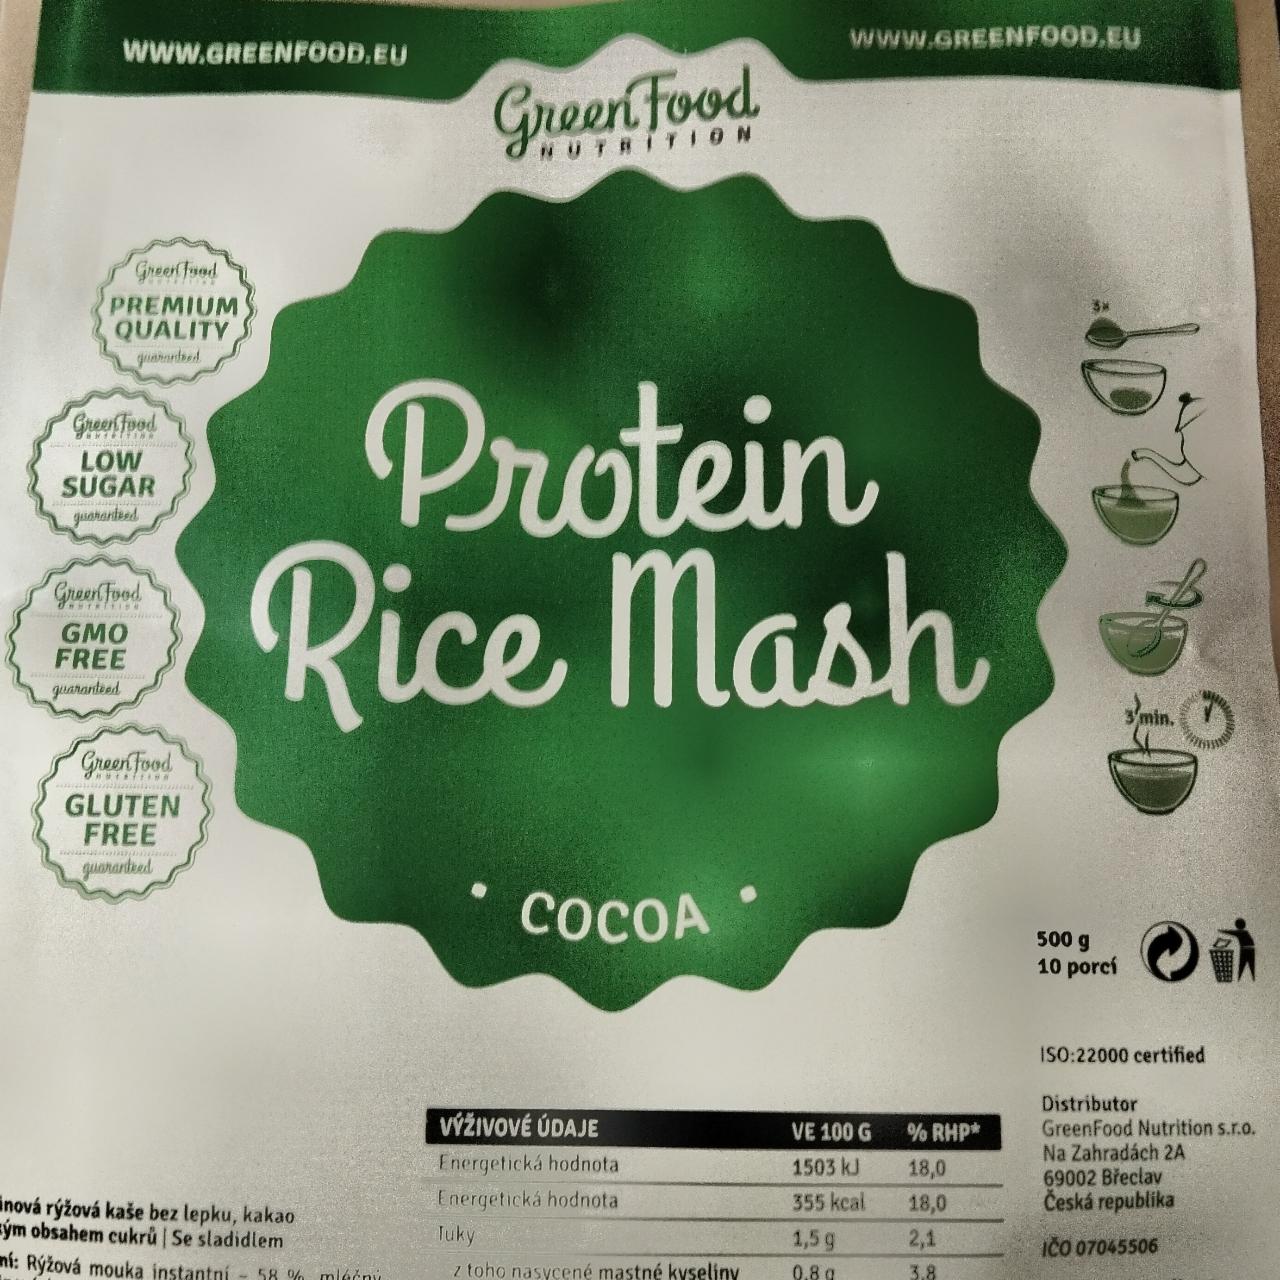 Fotografie - Protein Rice Mash cocoa Green Food